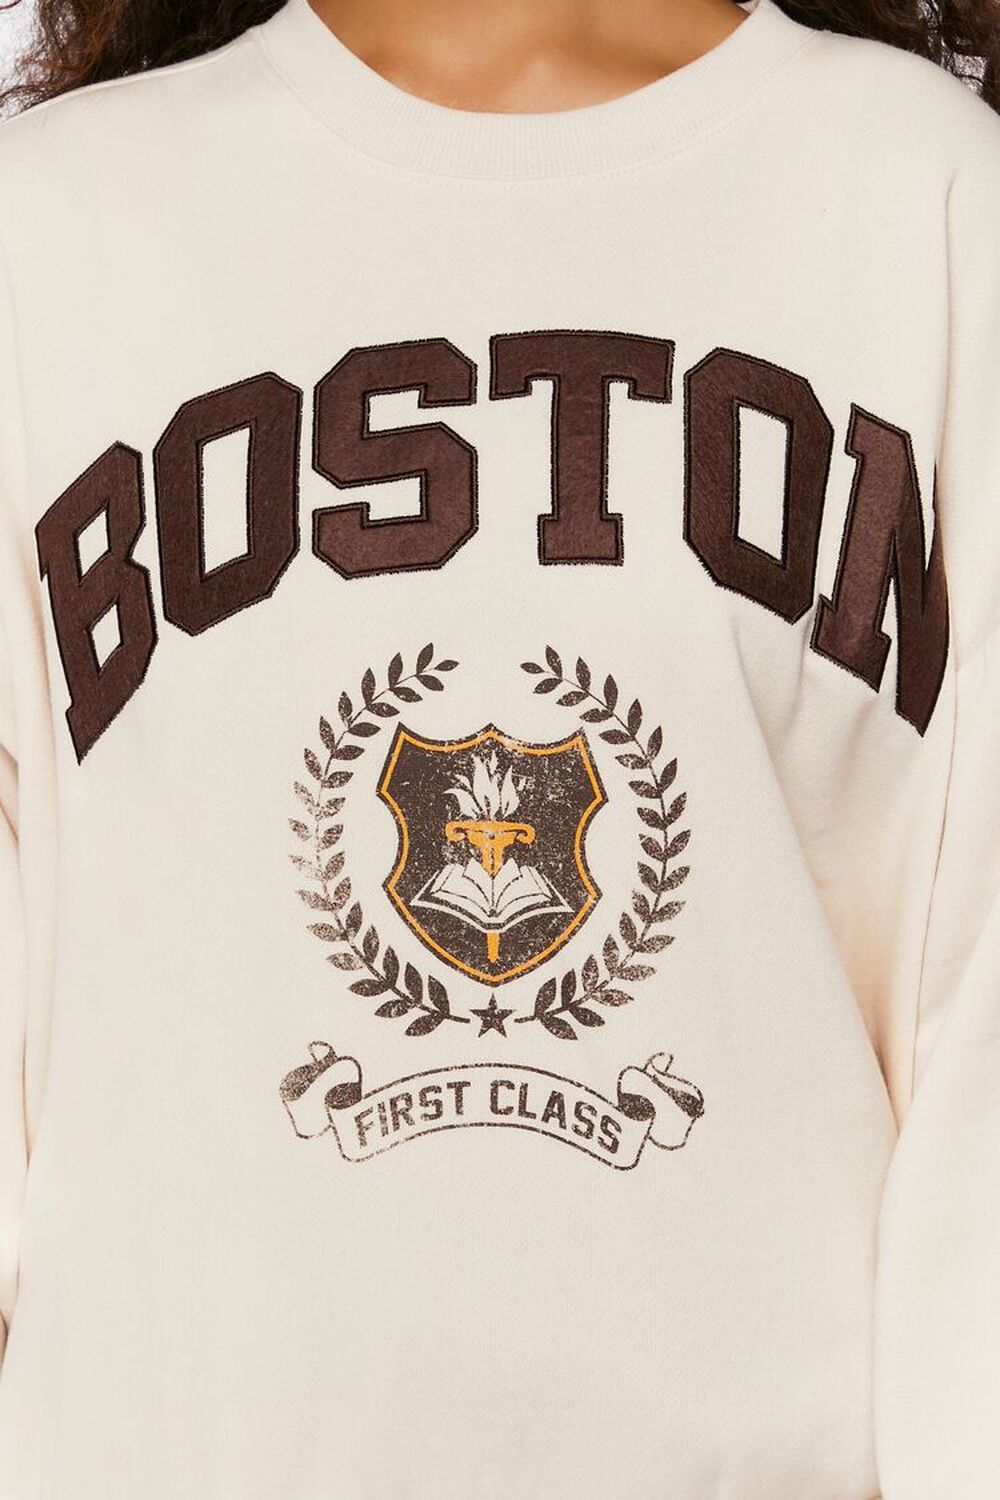 Boston - Gray Shirt - Ladies Cut - S - Forever 21